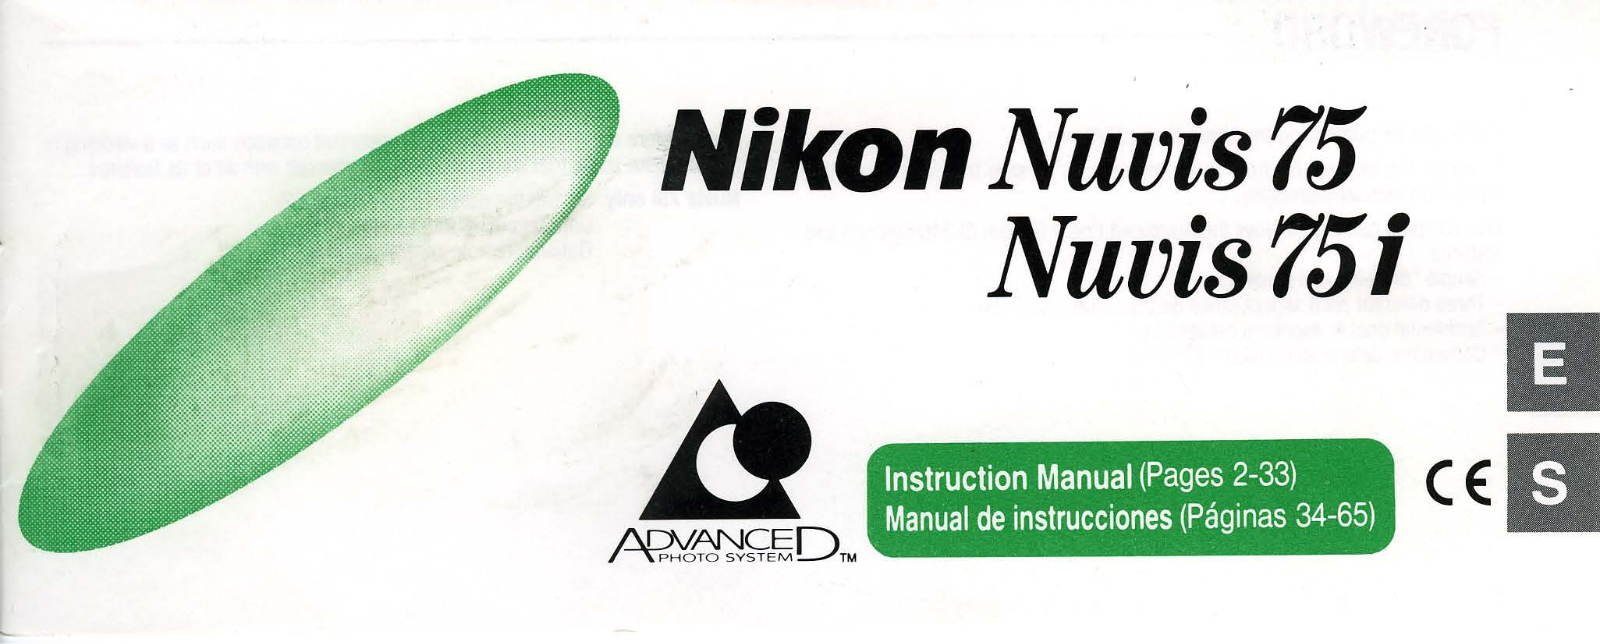 Nikon Nuvis 75i, Nuvis 75 Instruction Manual